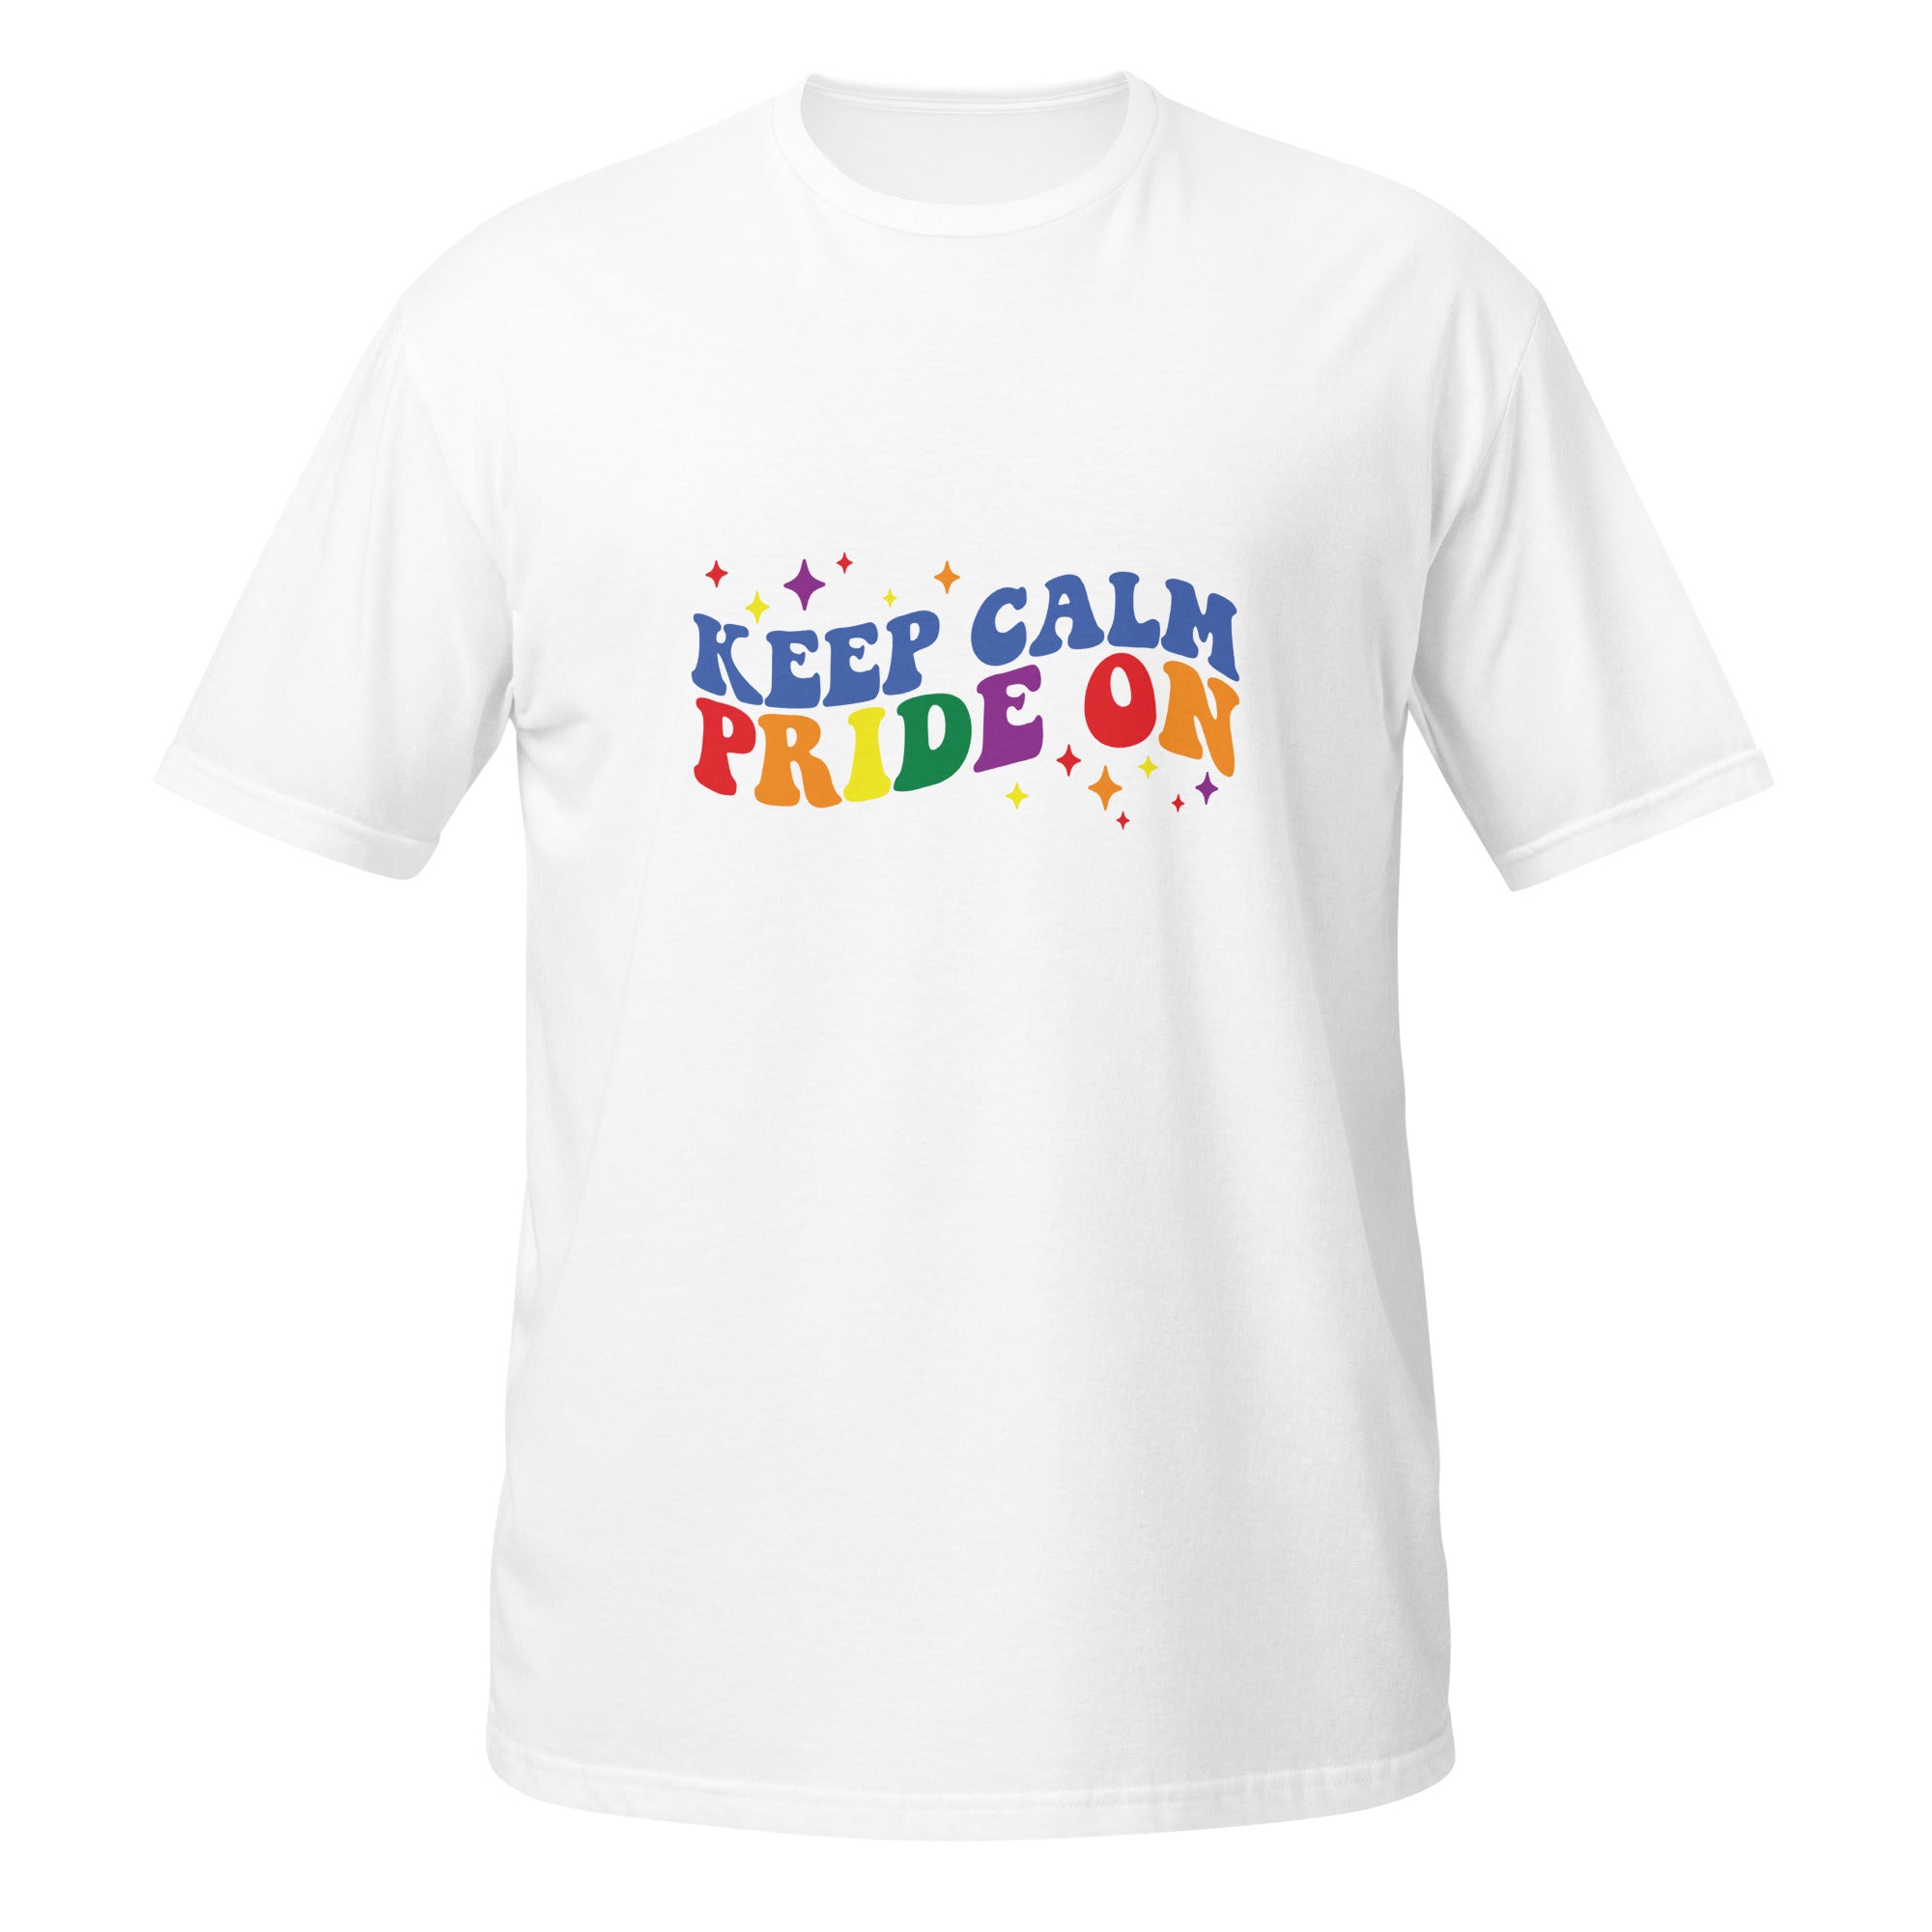 Short-Sleeve Unisex T-Shirt- Keep calm pride on